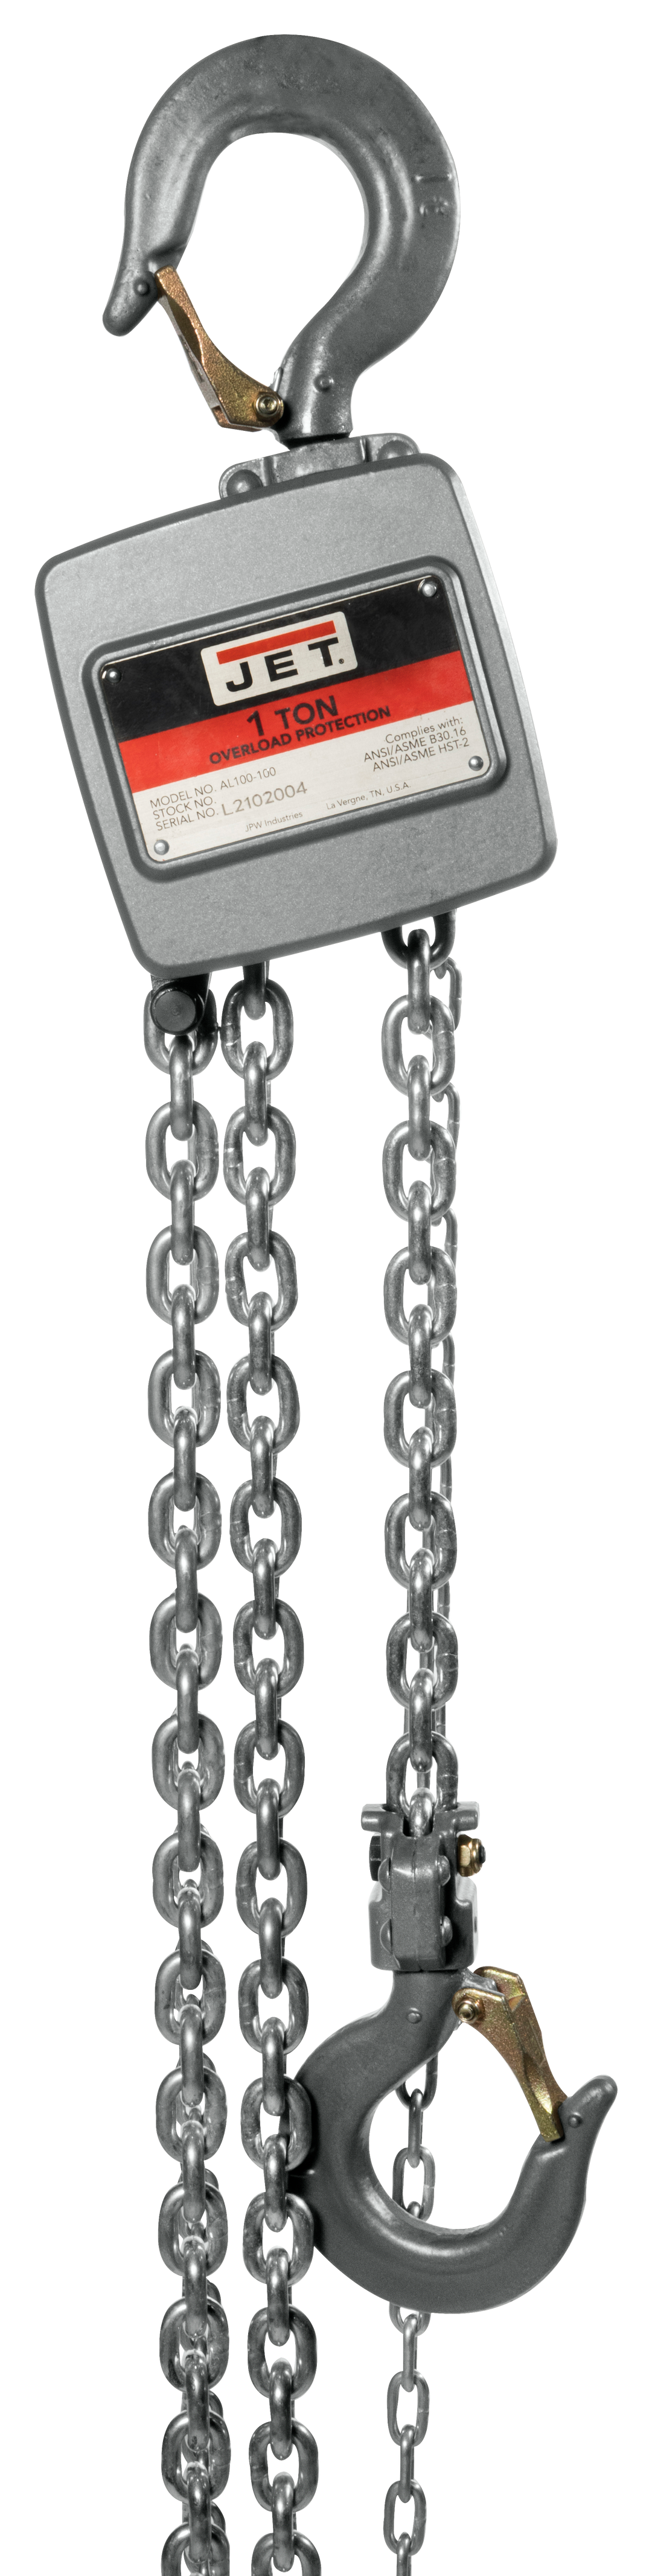 JET 1-Ton Aluminum Hand Chain Hoist